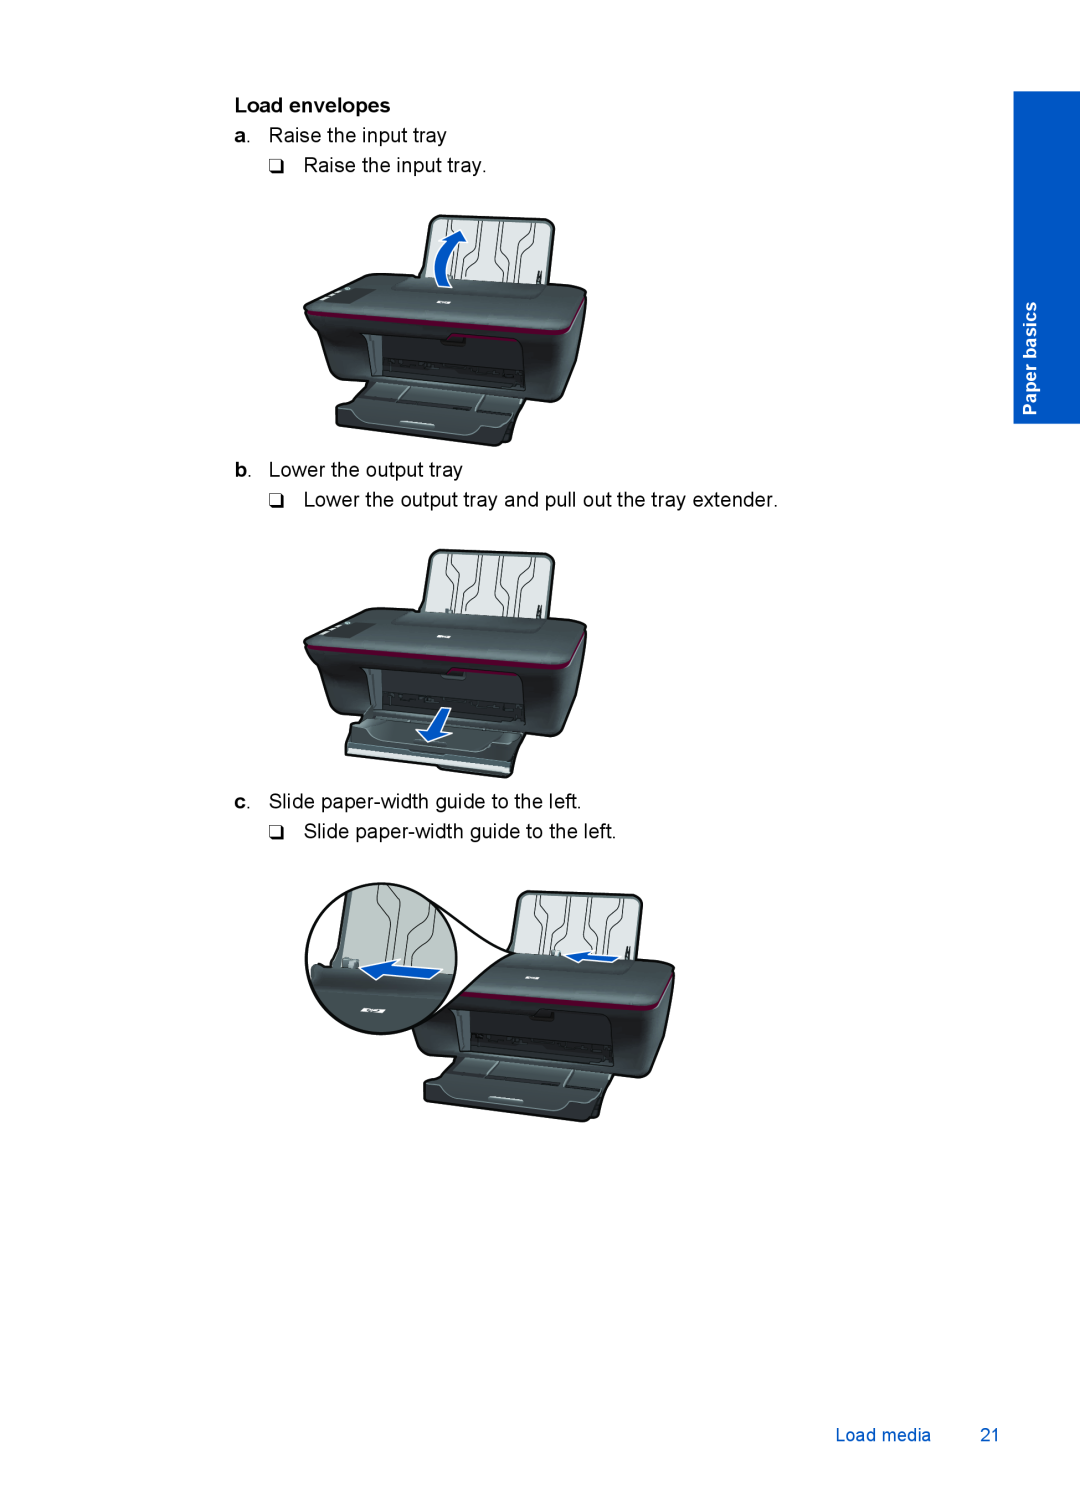 HP 1055 - J410e, 1051 Load envelopes, a. Raise the input tray Raise the input tray, b. Lower the output tray, Paper basics 